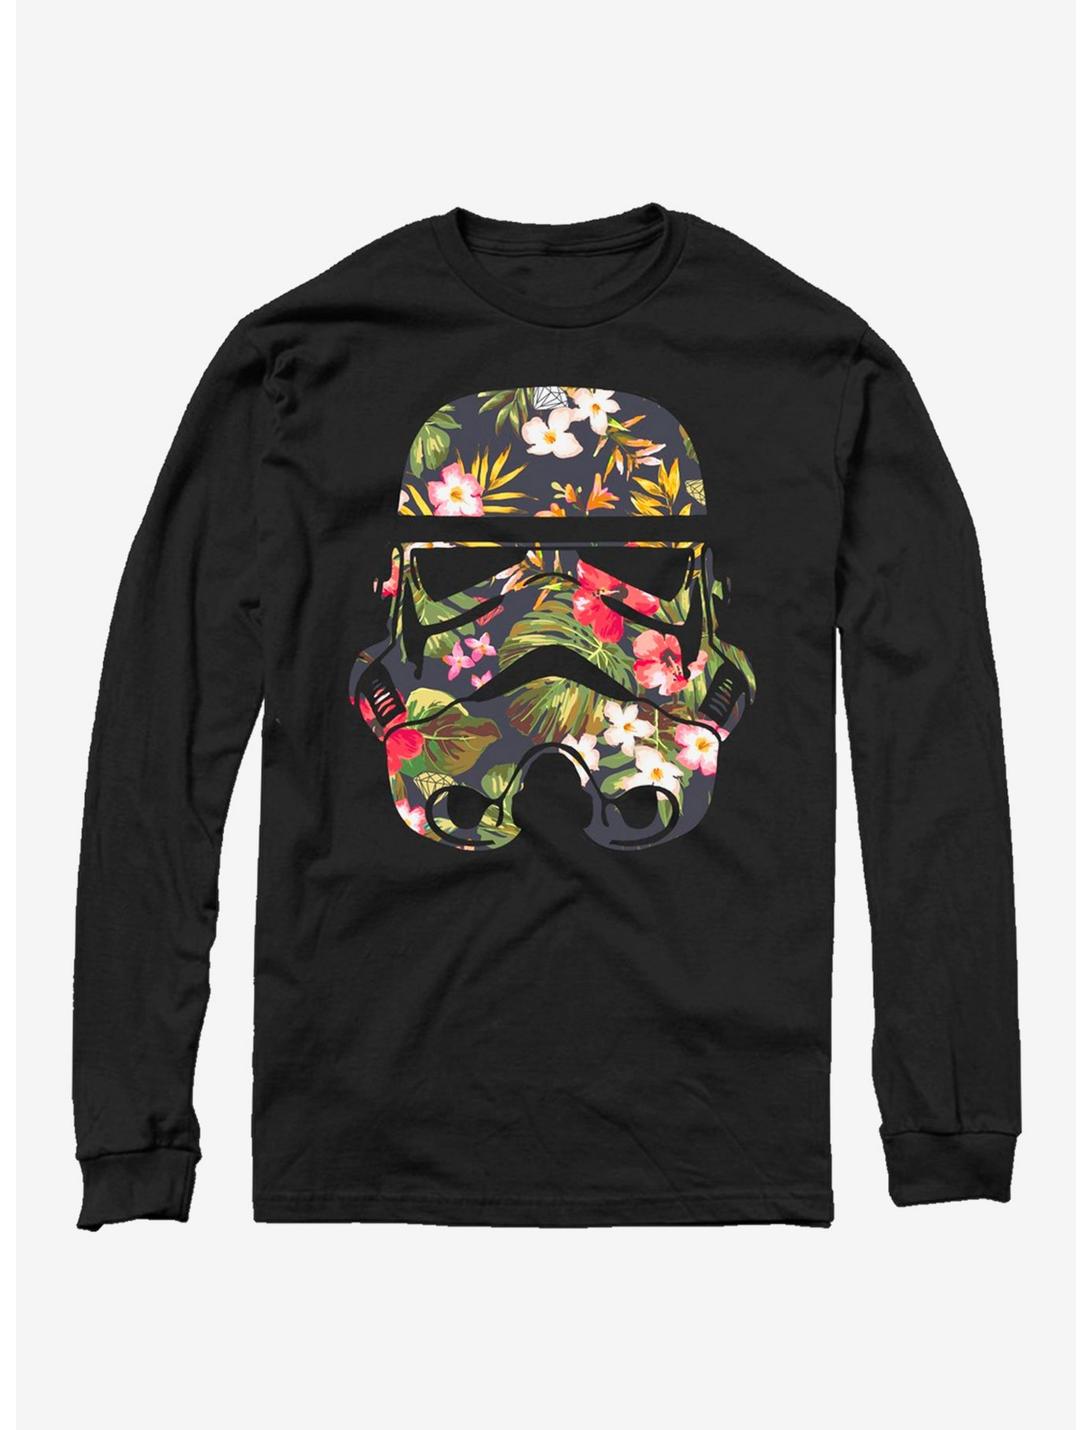 Star Wars Storm Flowers Long-Sleeve T-Shirt, BLACK, hi-res